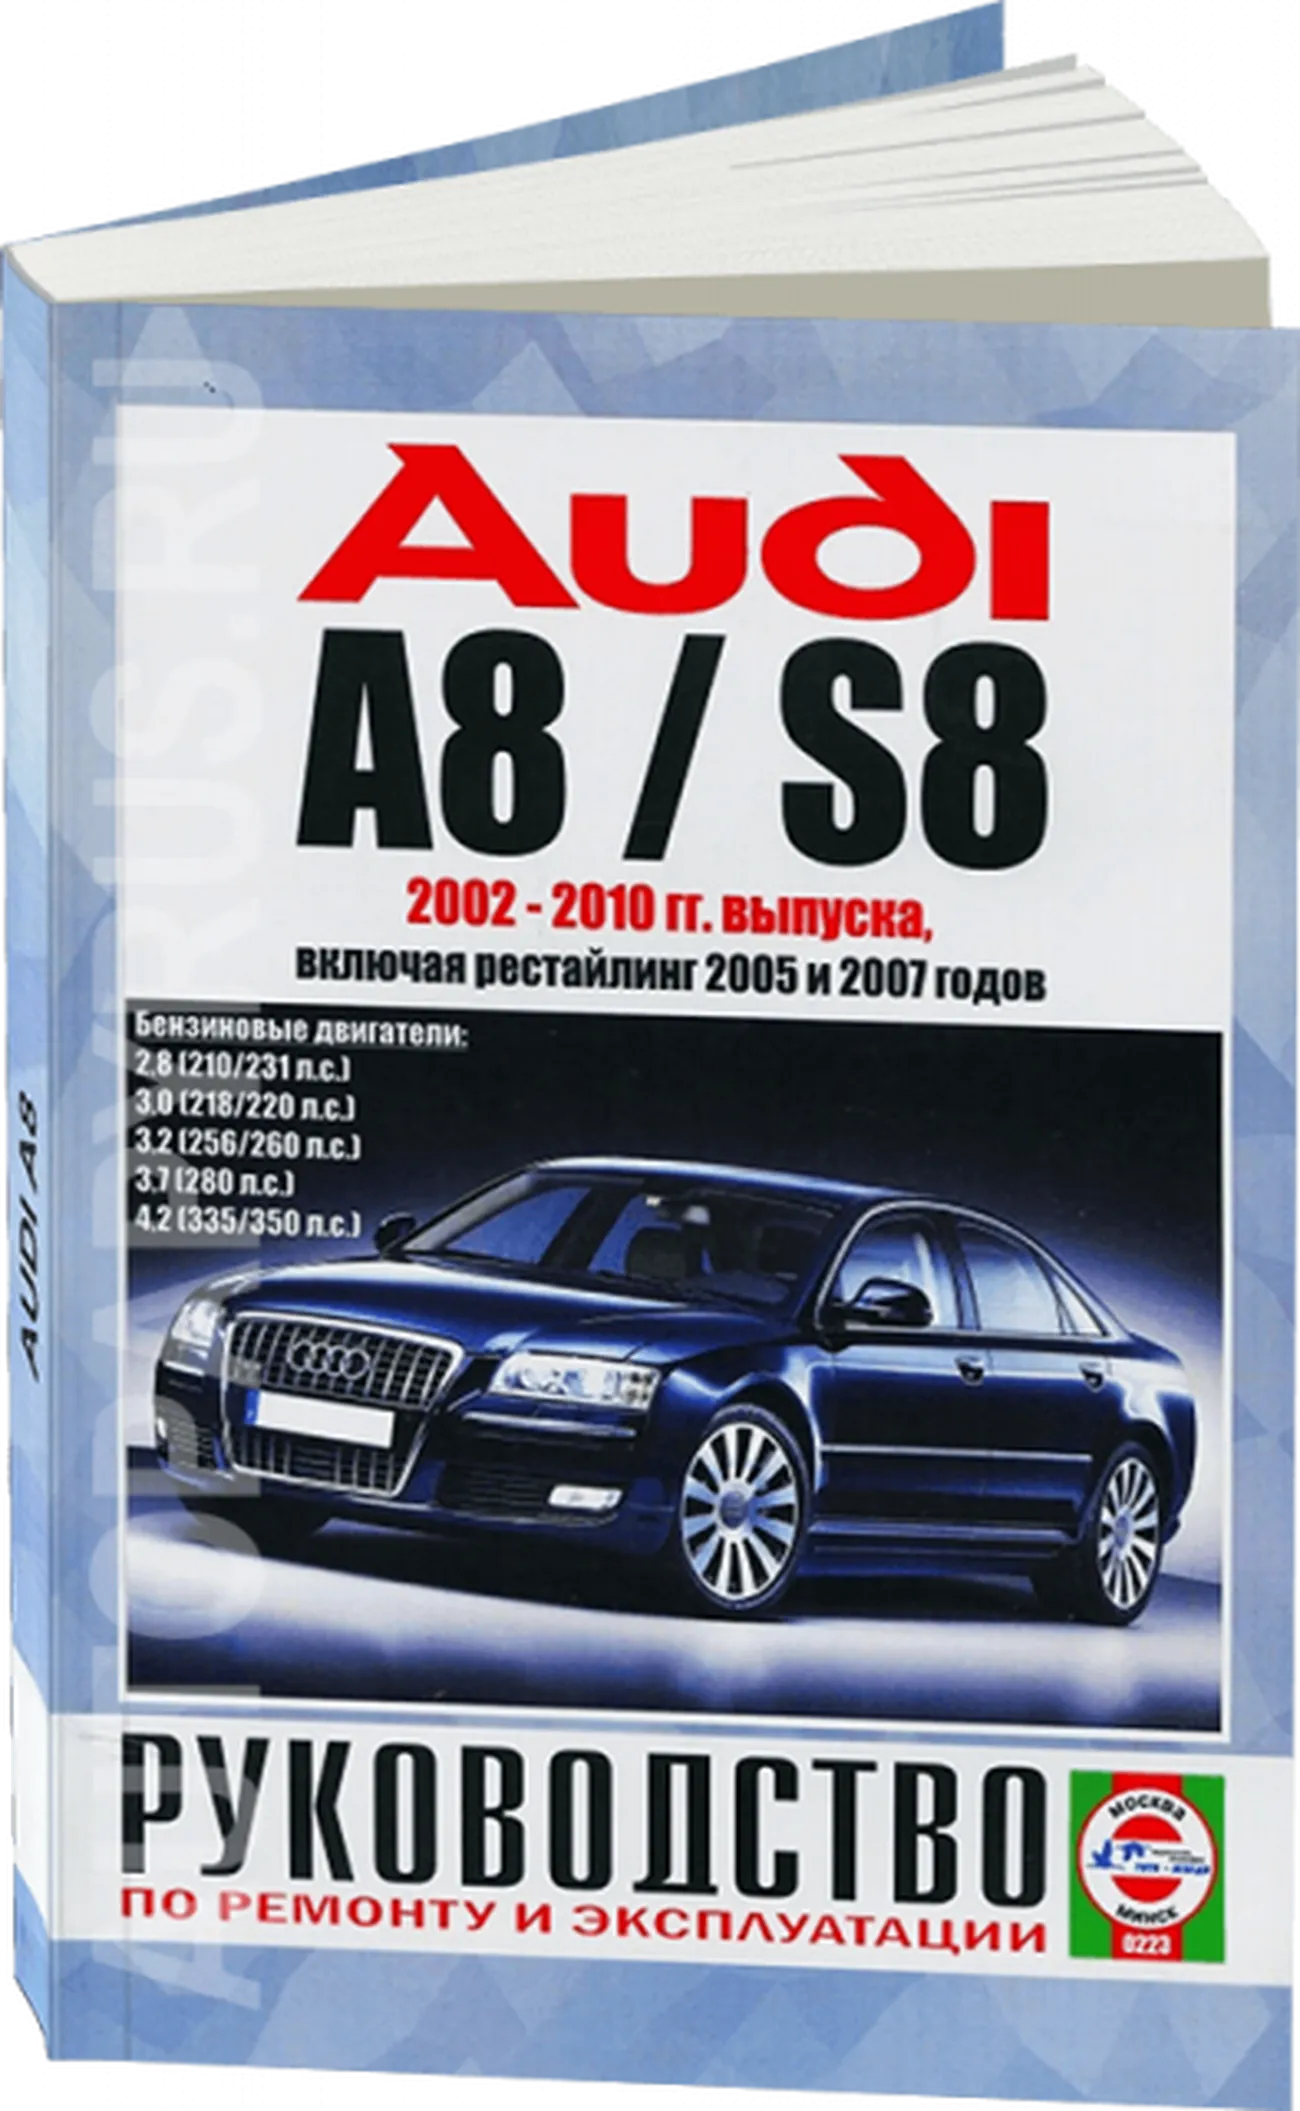 Книга: AUDI A8 / S8 (б) 2002-2010 г.в., рем., экспл., то | Чижовка